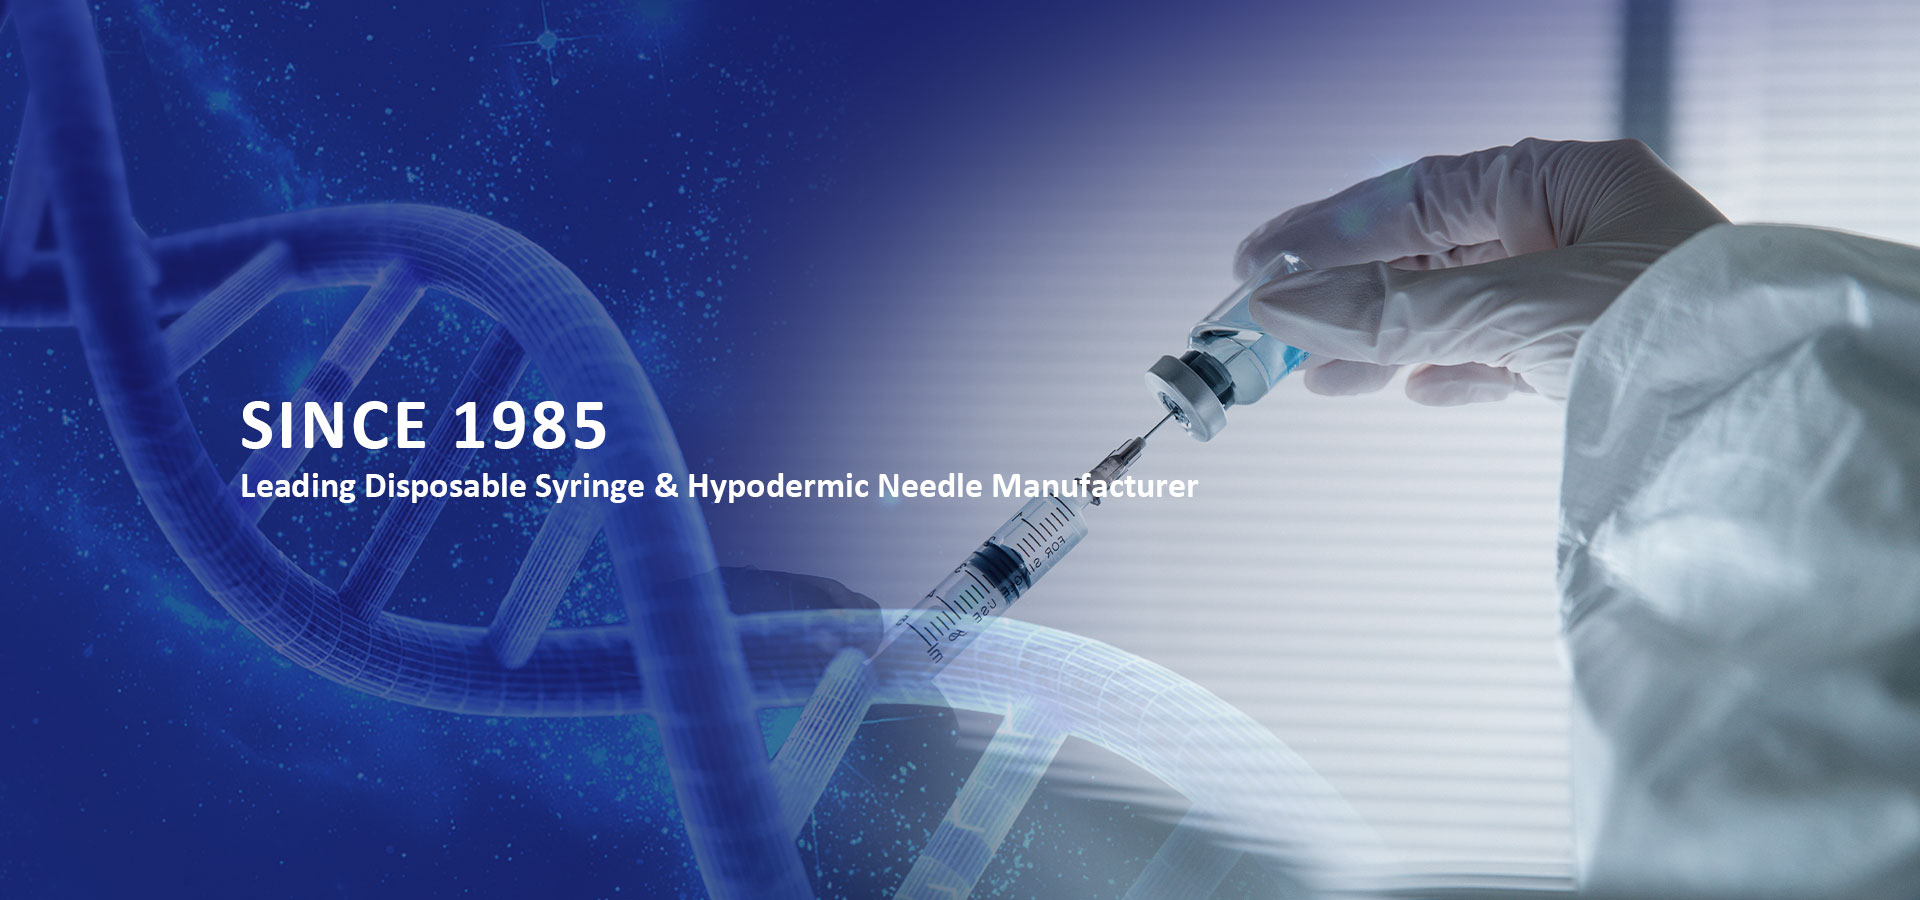 Leading Disposable Syringe & Hypodermic Needle Manufacturer